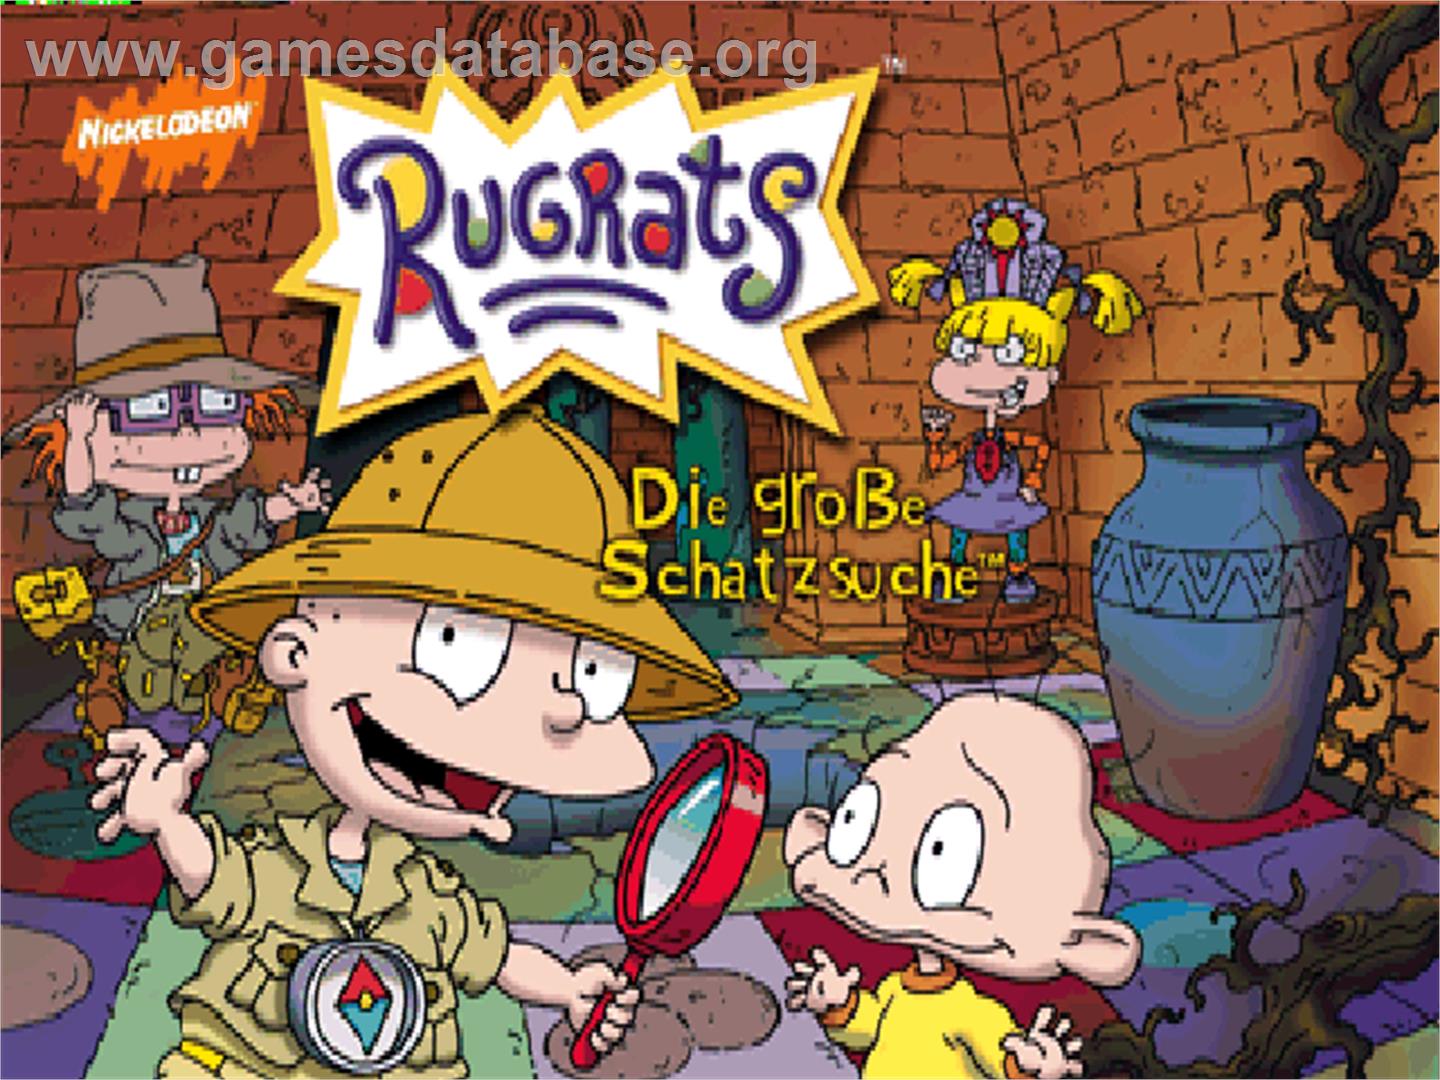 Rugrats: Die grosse Schatzsuche - Nintendo N64 - Artwork - Title Screen